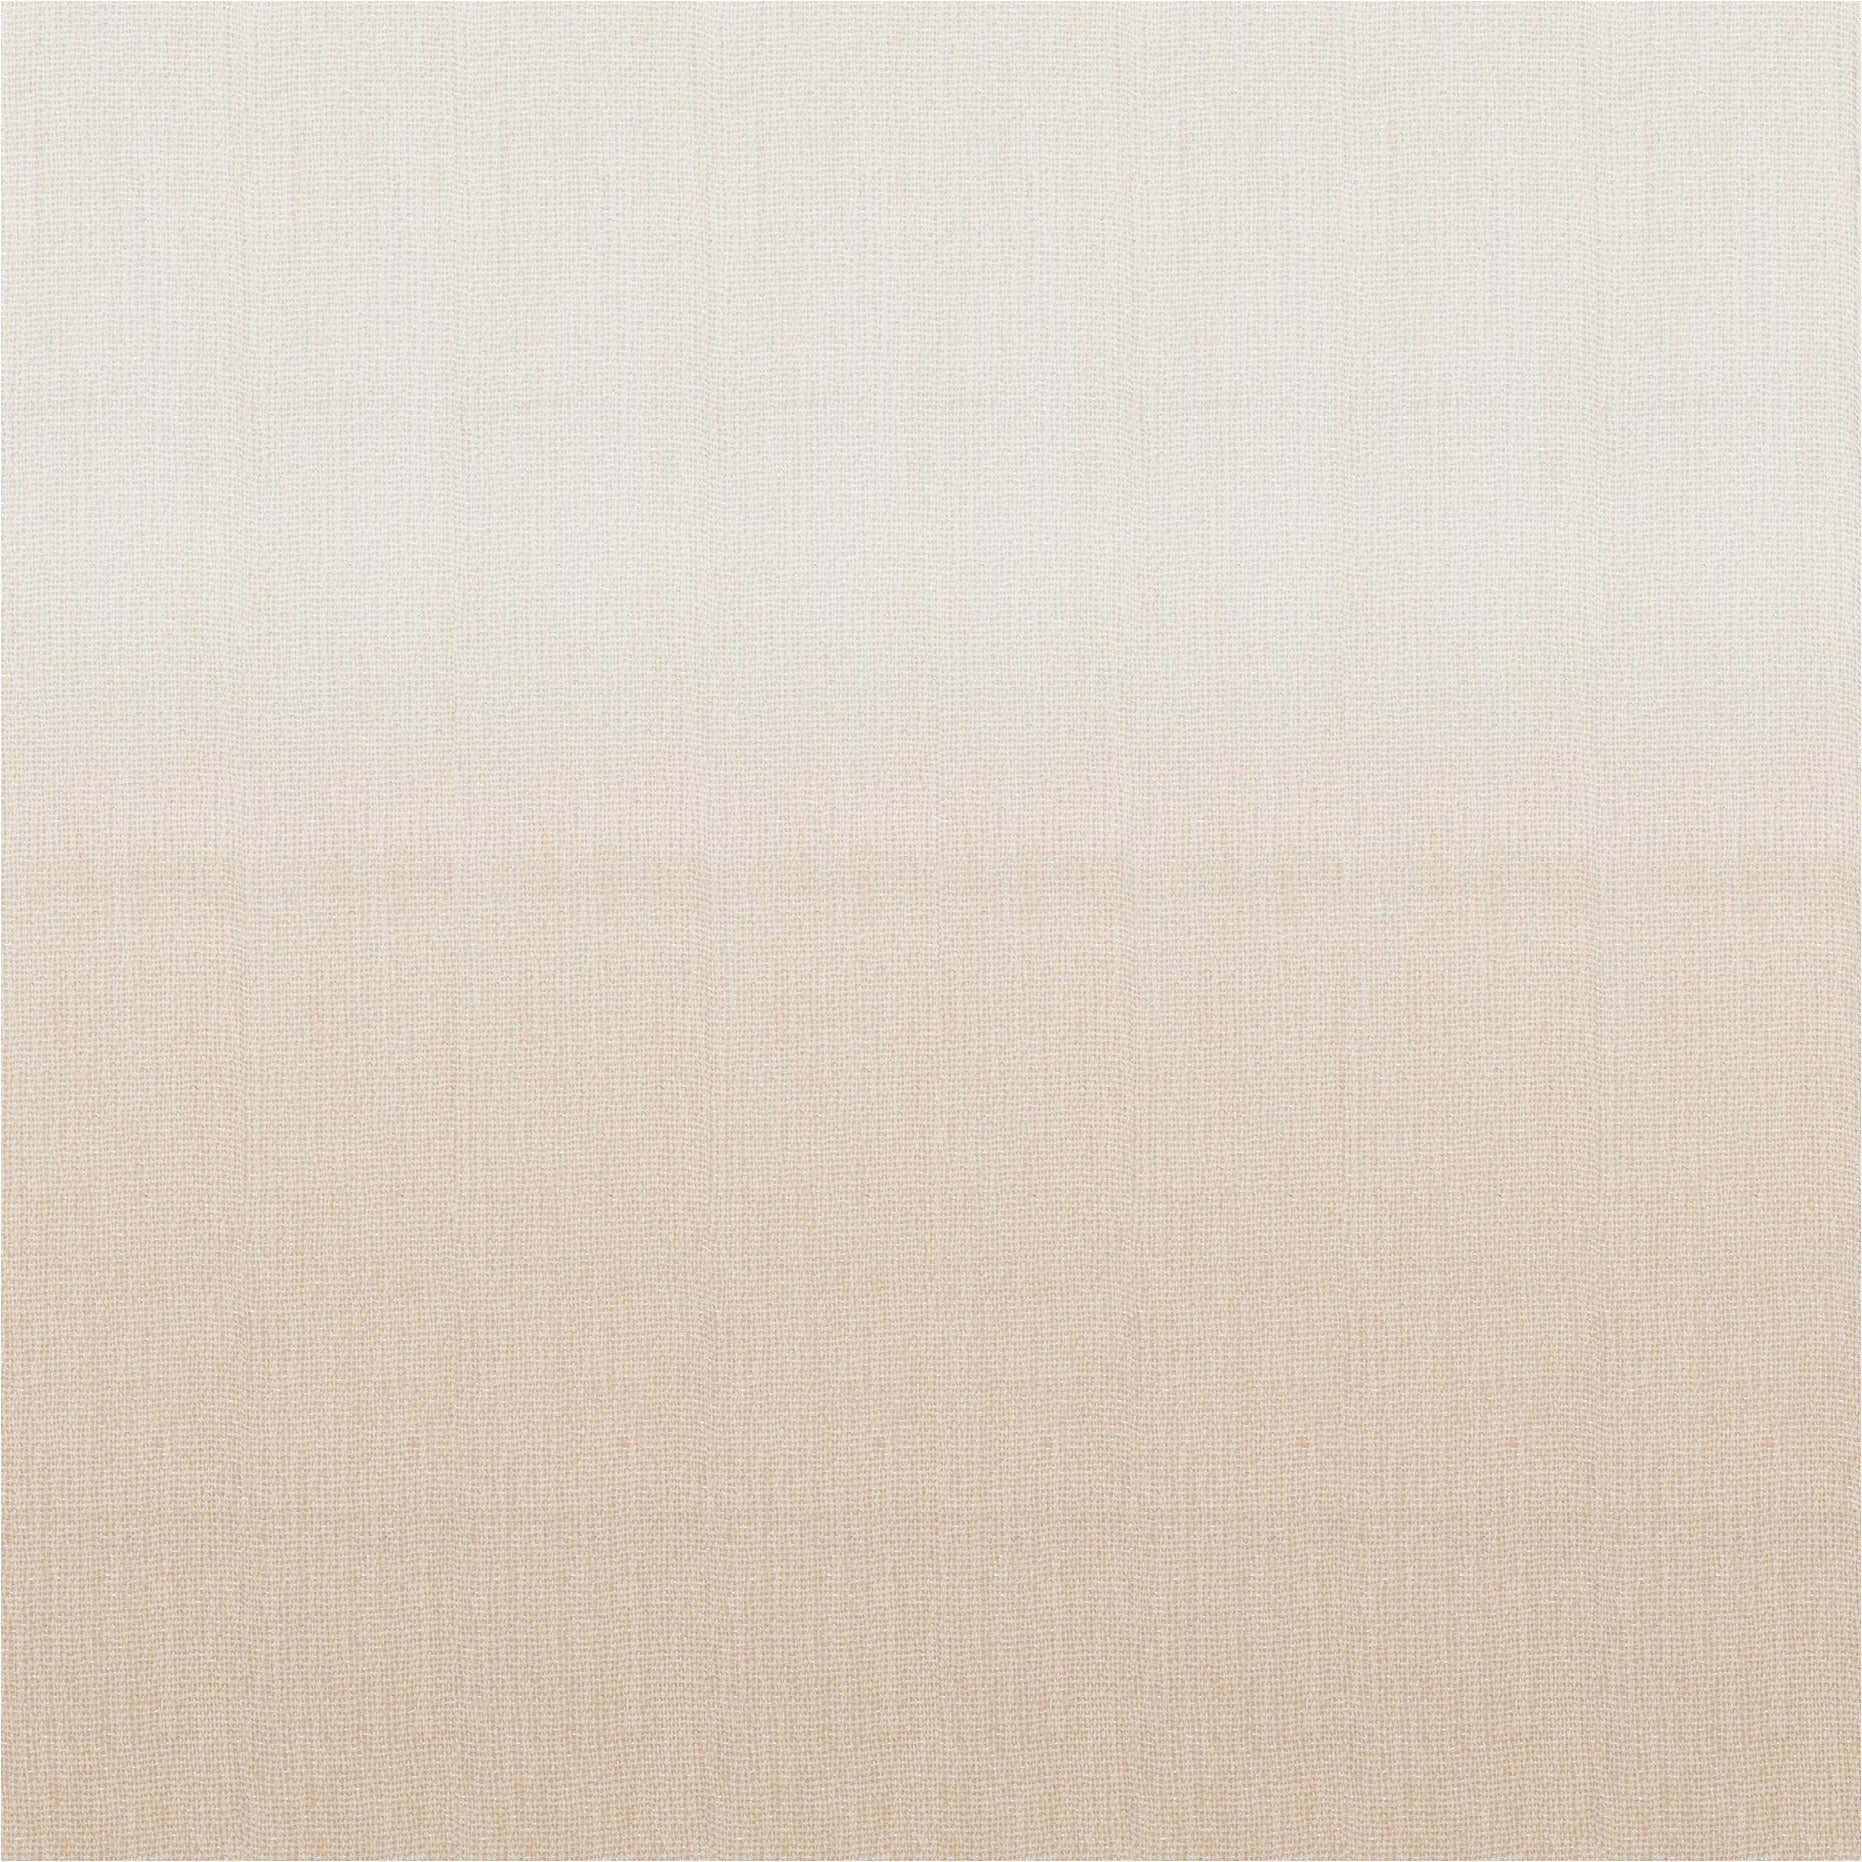 Ombre Alpaca Linen Glam Sheer Fabric